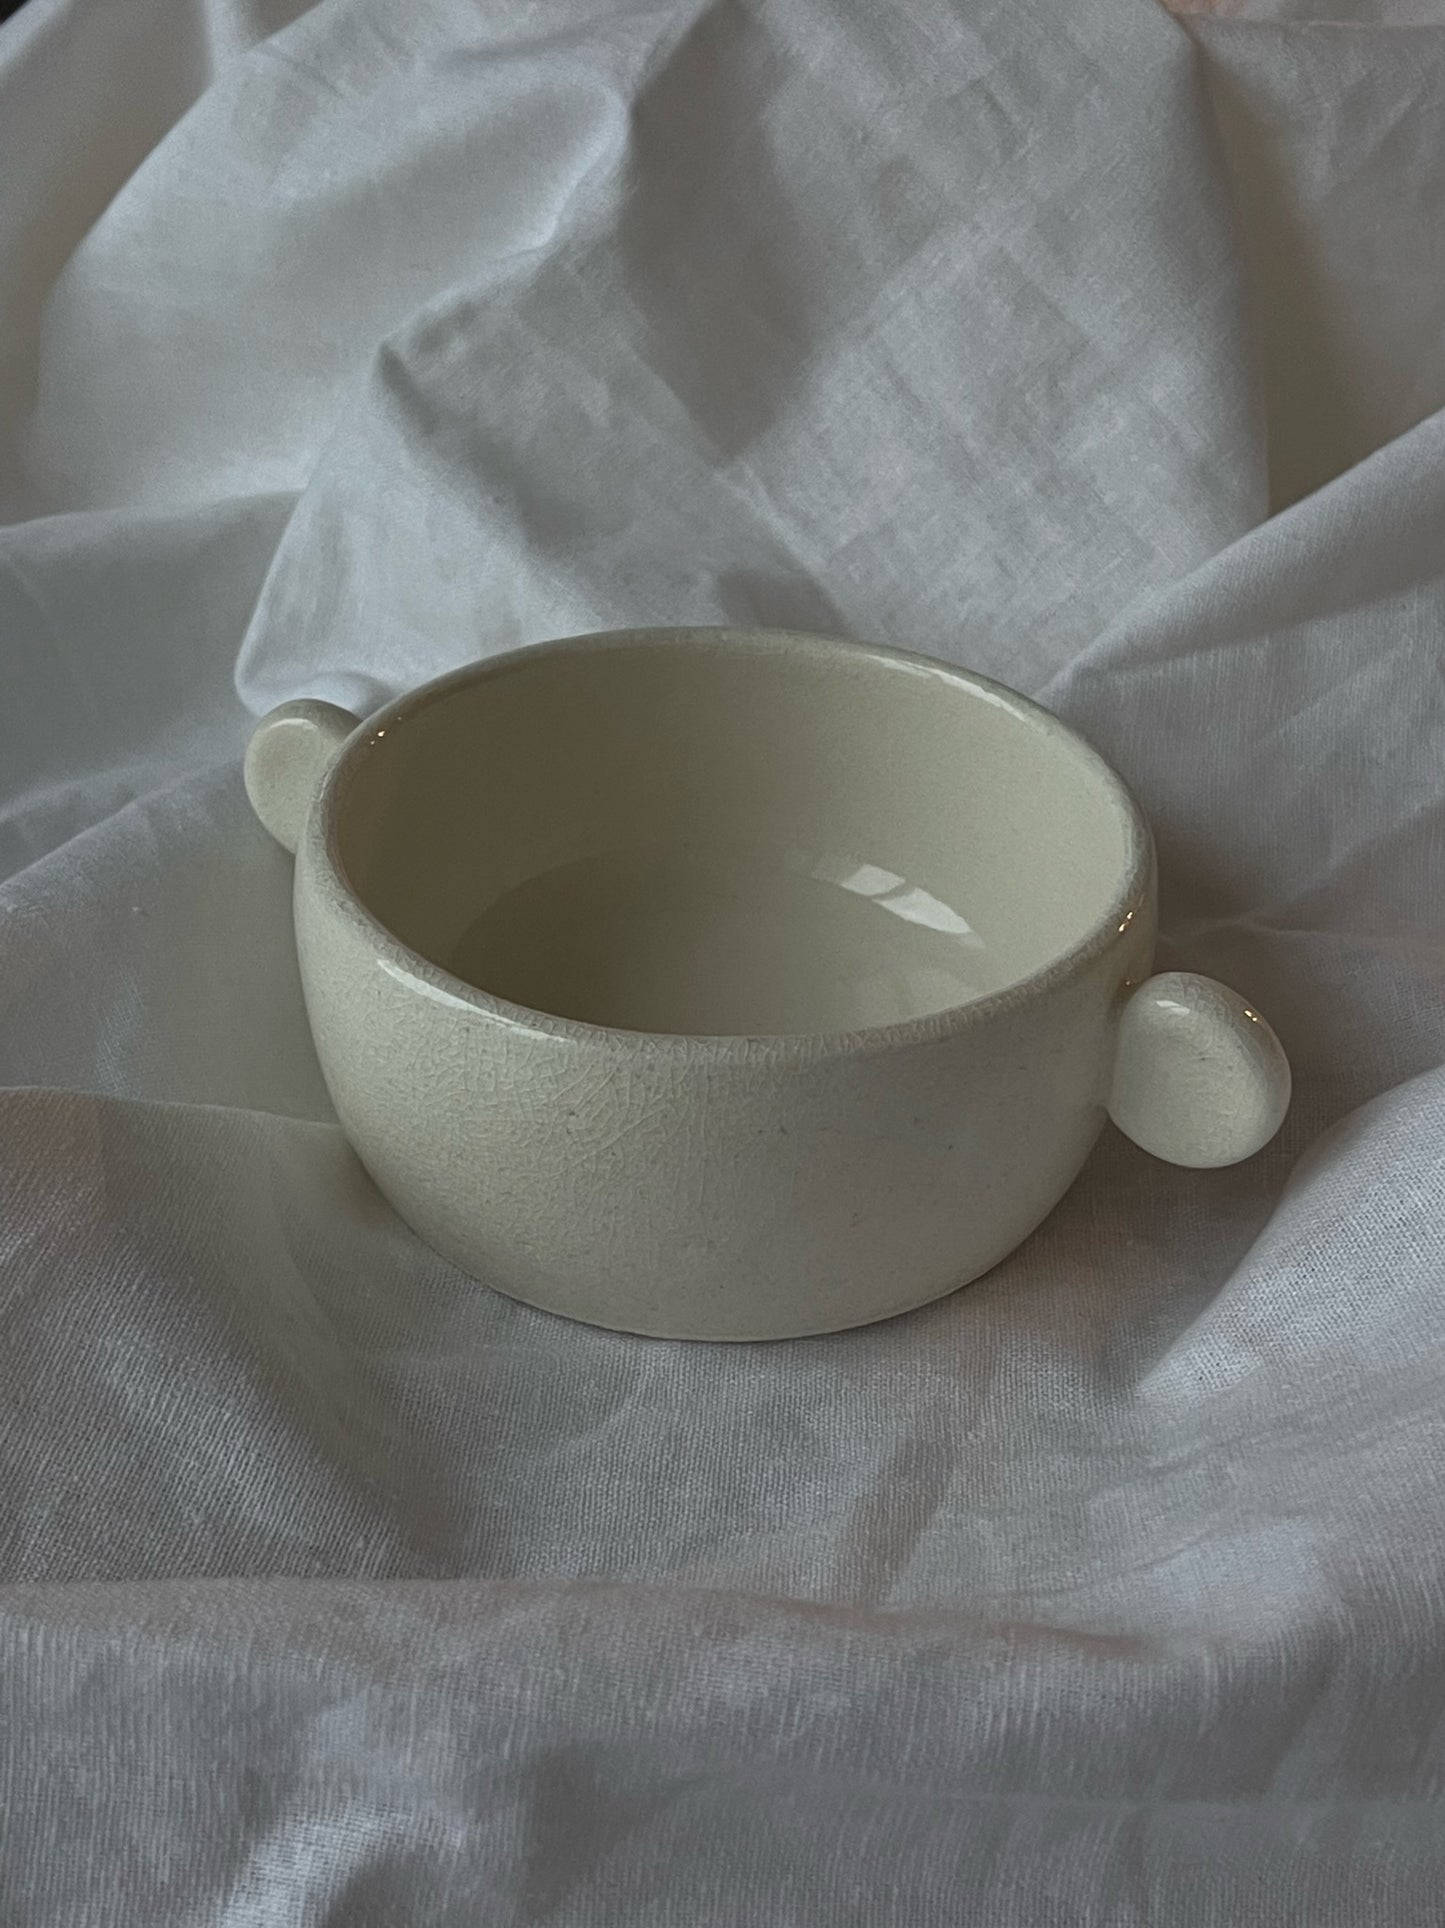 Off-white ceramic bowl with flat ears - Artisanal kitchenware